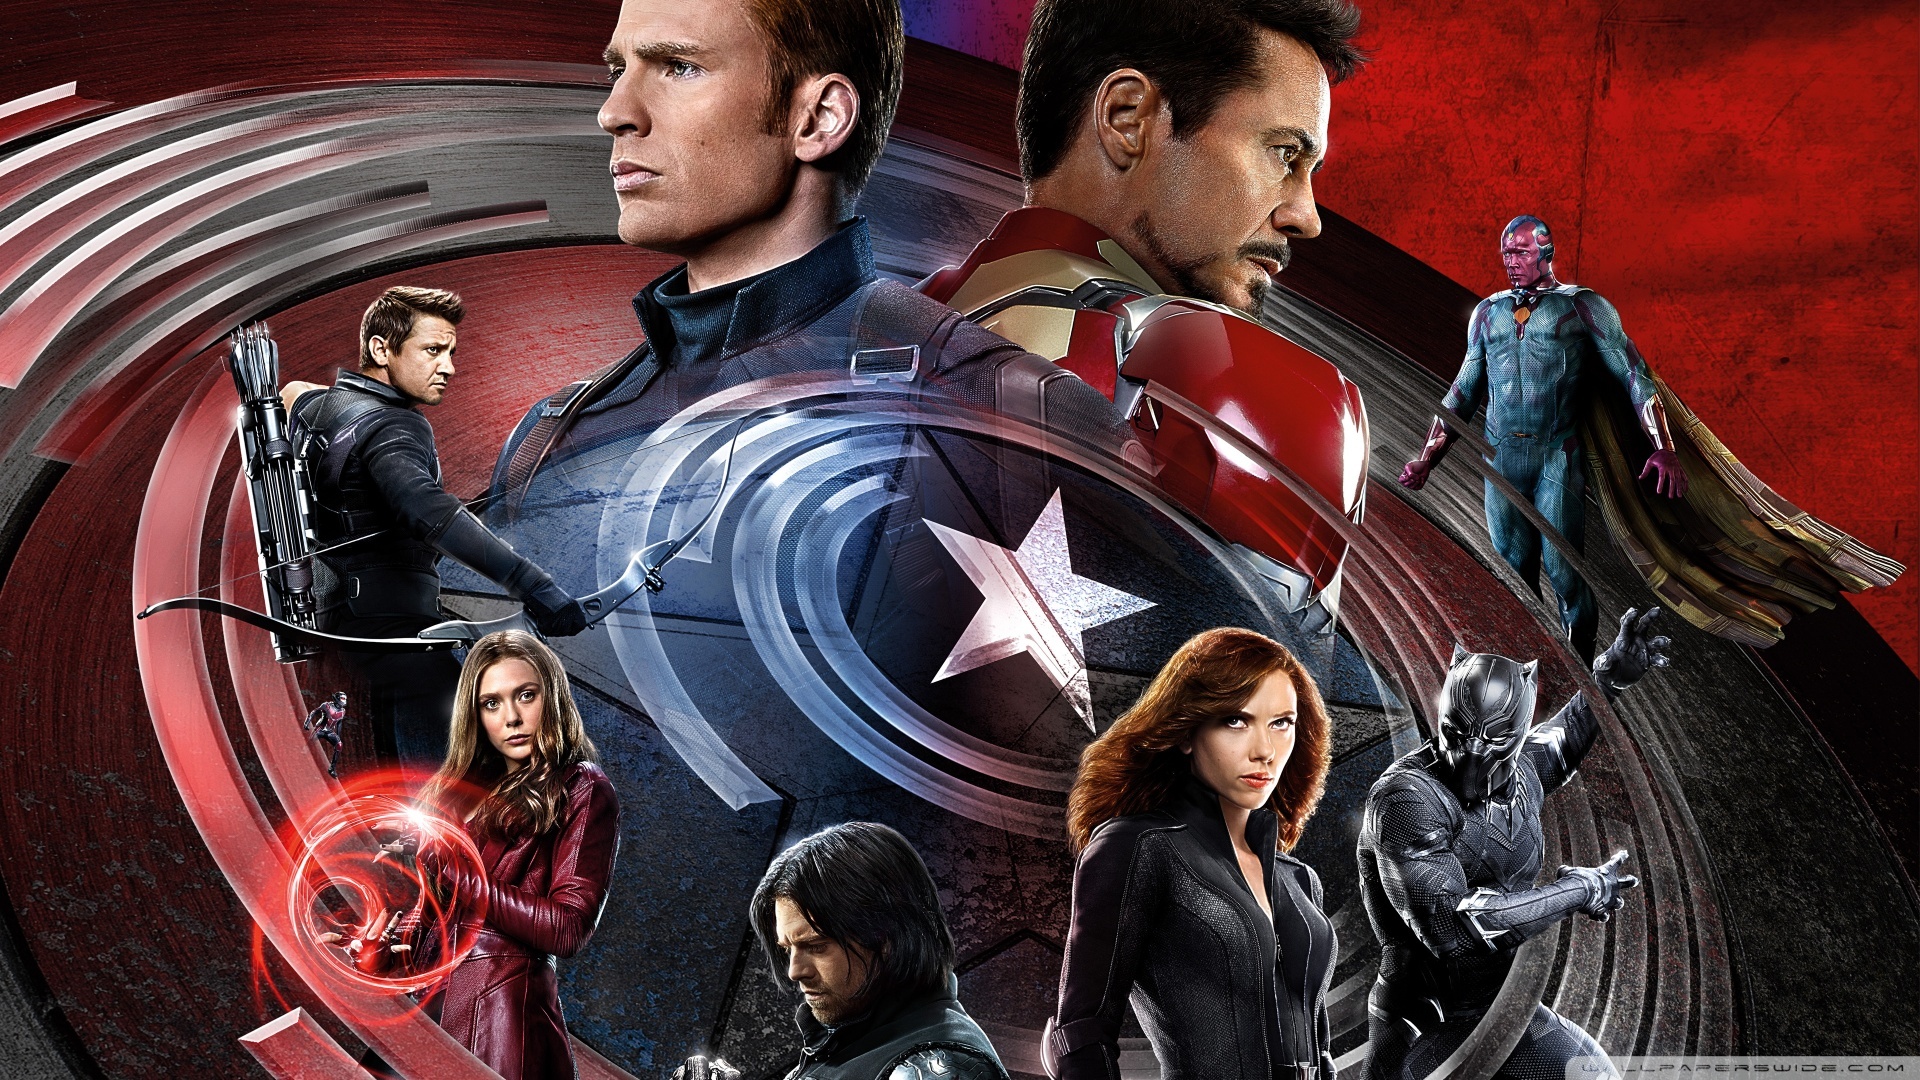 civil war wallpaper,movie,fictional character,superhero,hero,action film